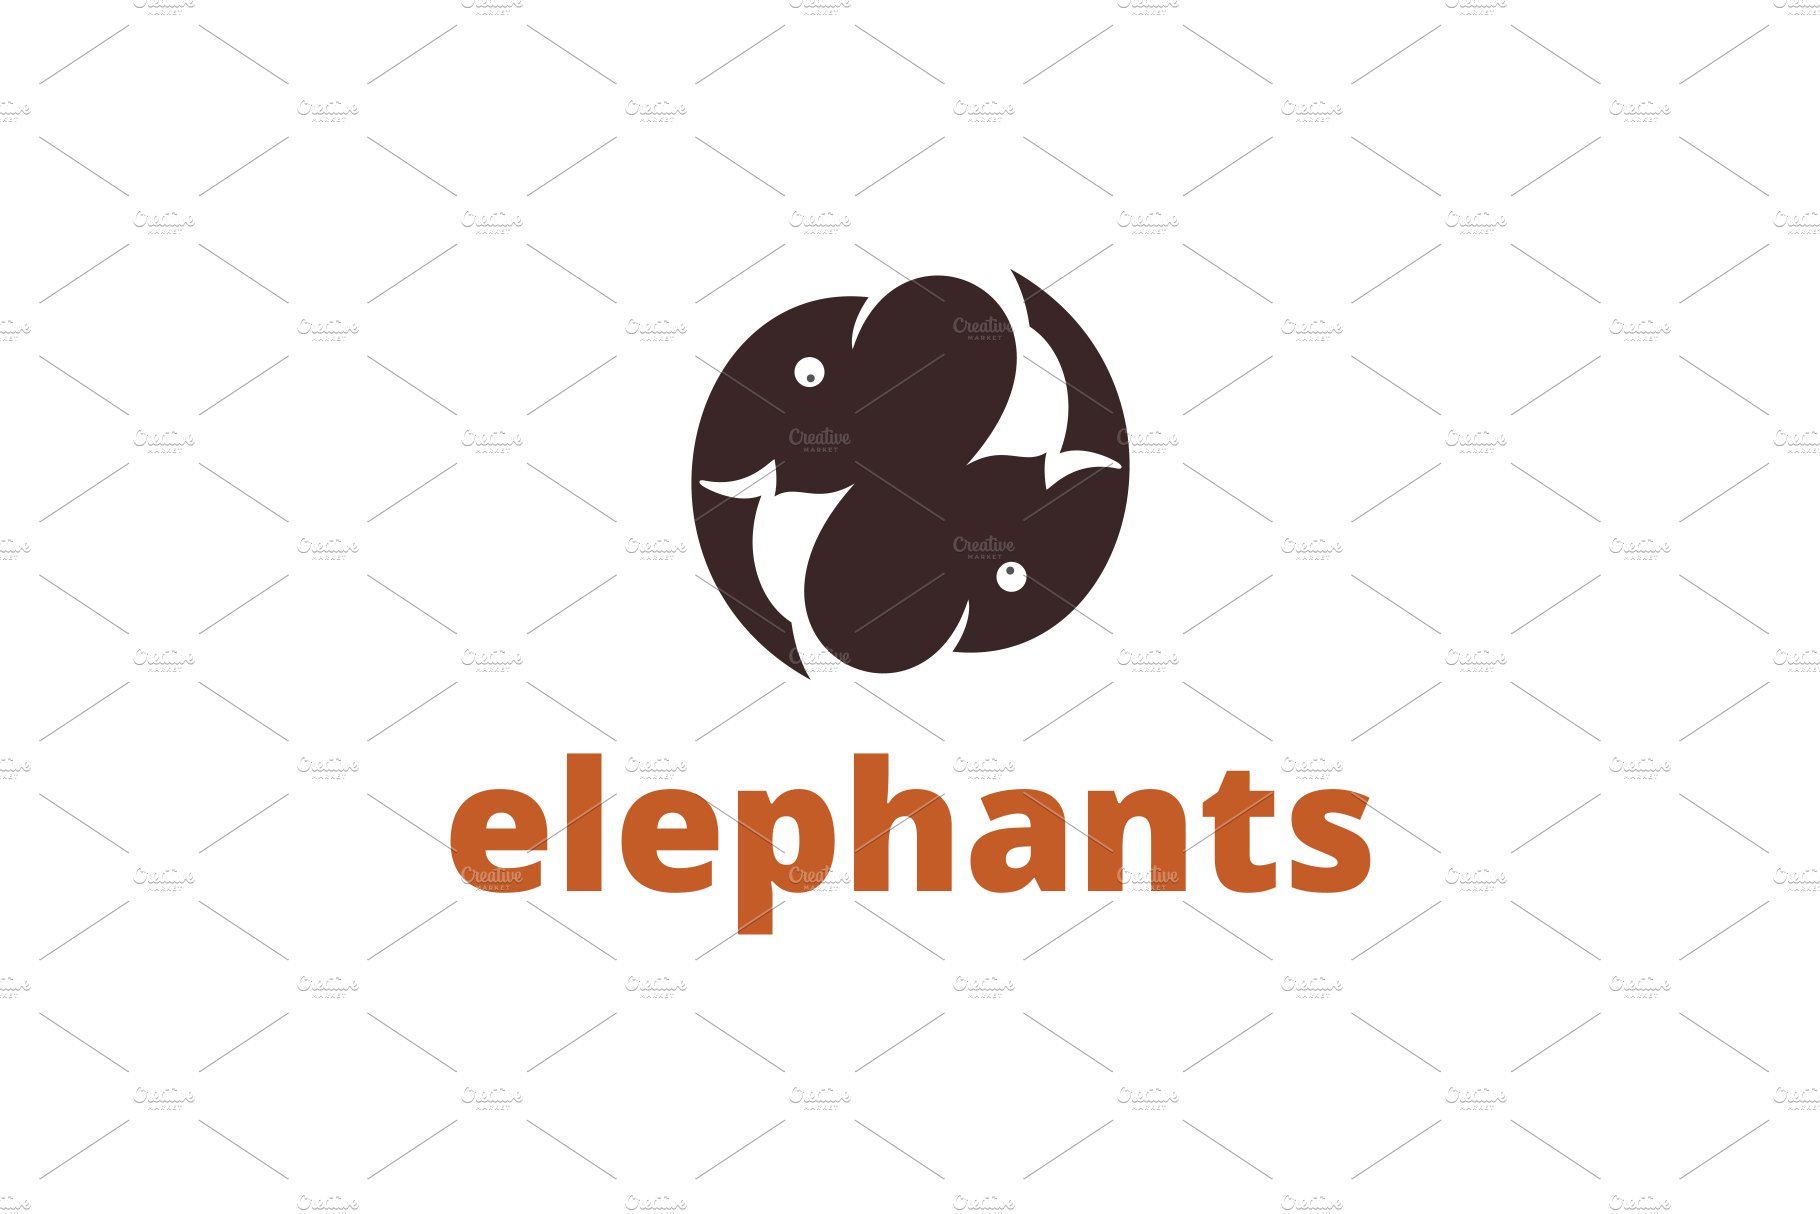 Elephants Logo cover image.